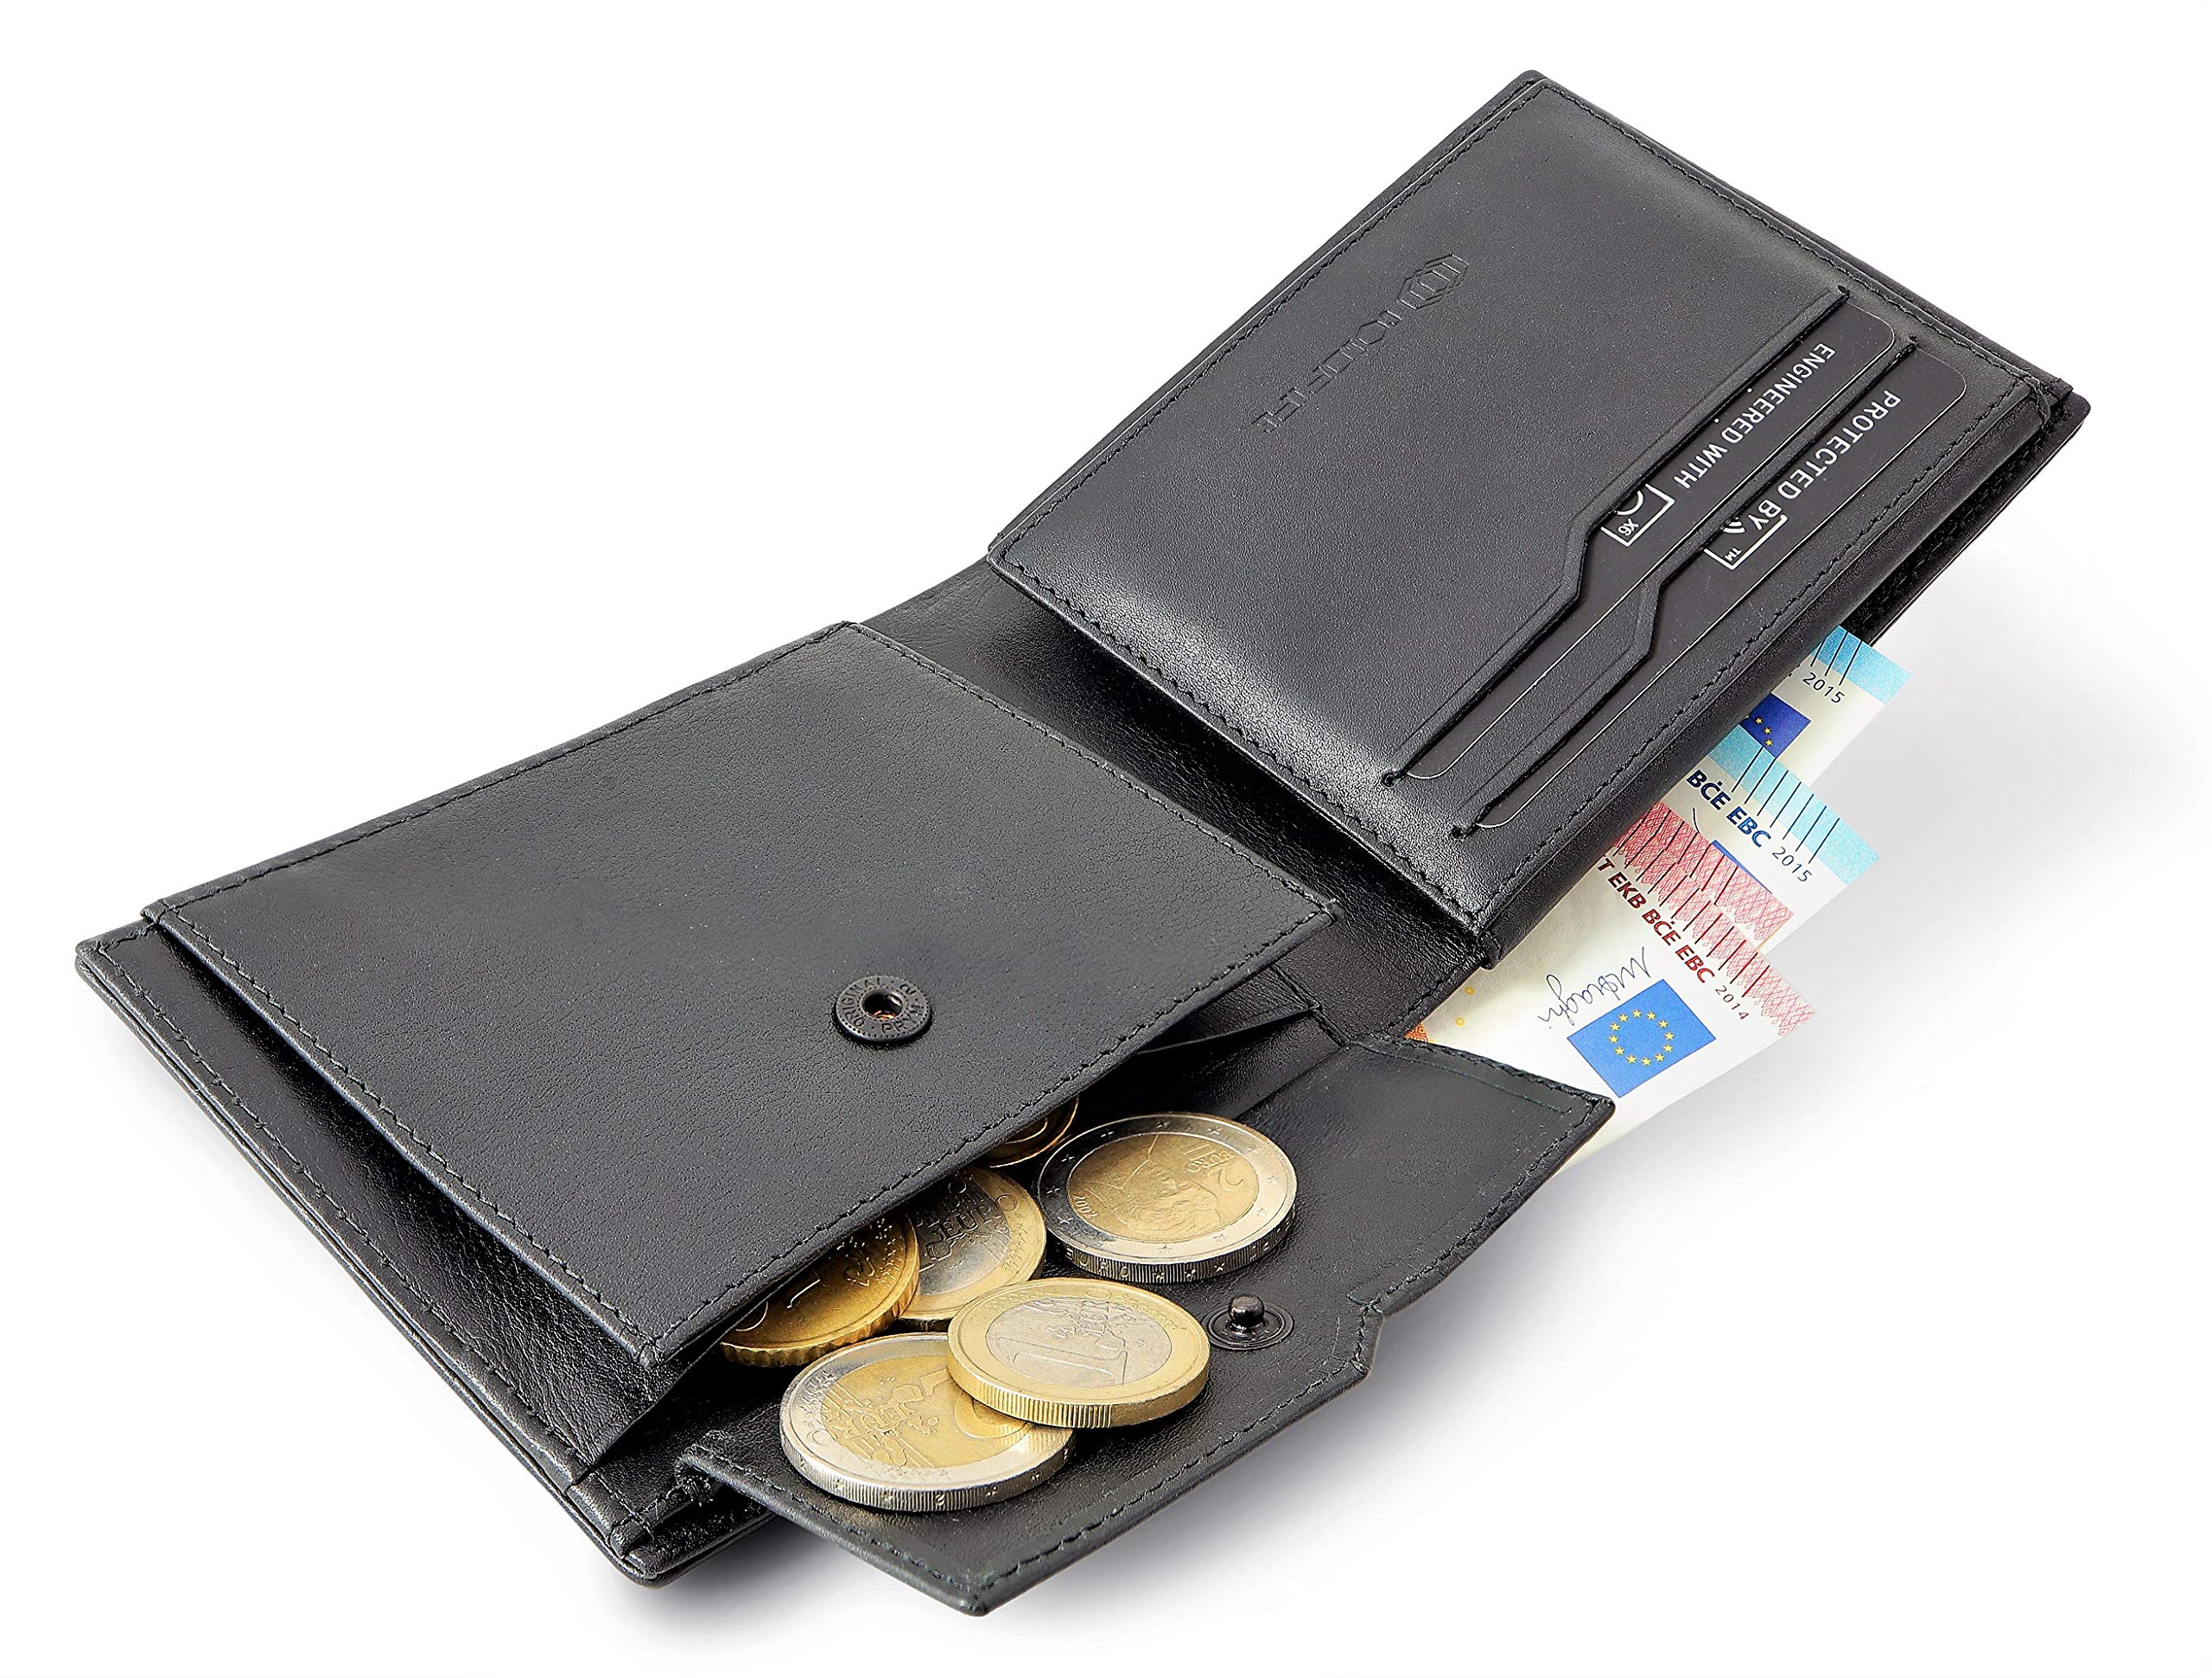 ColdFire Tactical Carbon Fiber Wallet with Coin Pocket & ID Window for Men - Handmade EDC Genuine K-Leather - Slim Bifold RFID Credit Card Holder